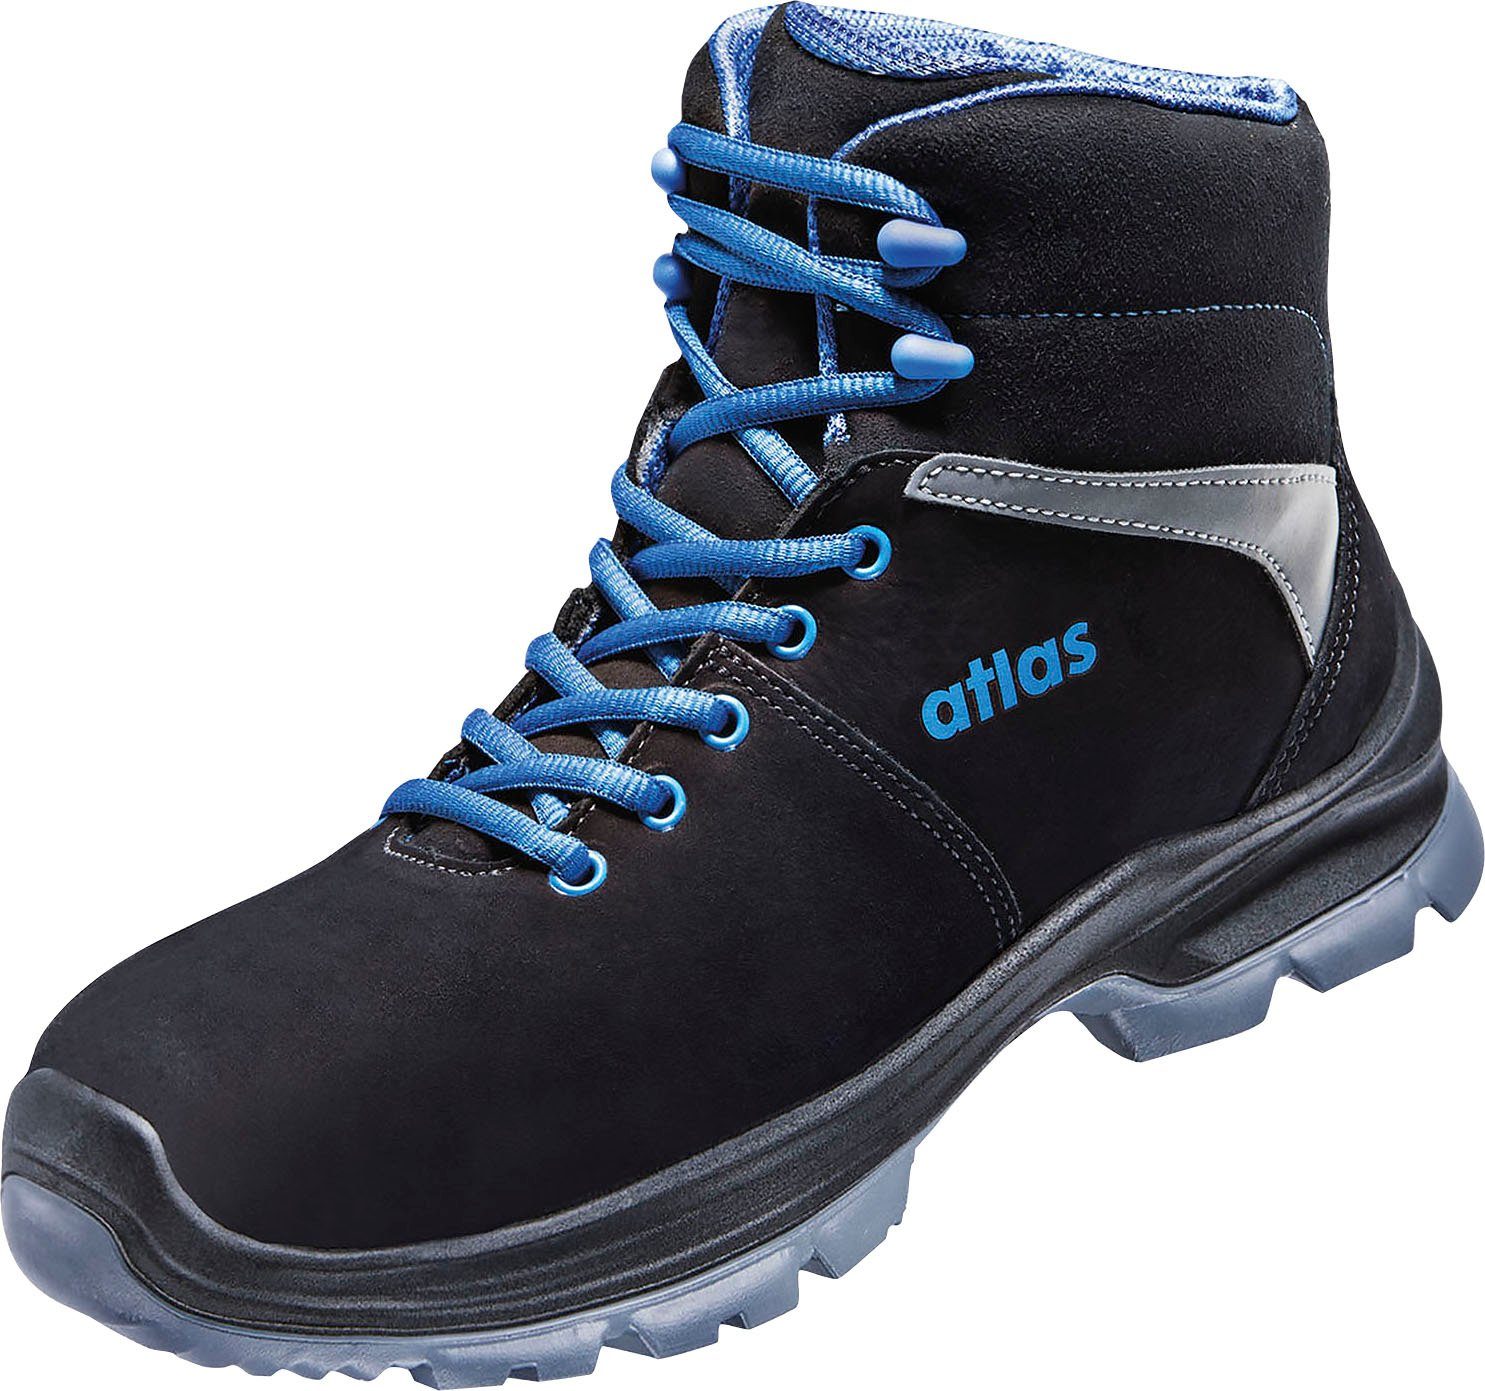 [Viele beliebte Produkte verfügbar] Atlas Schuhe 494 Sicherheitsschuh SL 805 S3 blue EN20345 XP ESD 2.0